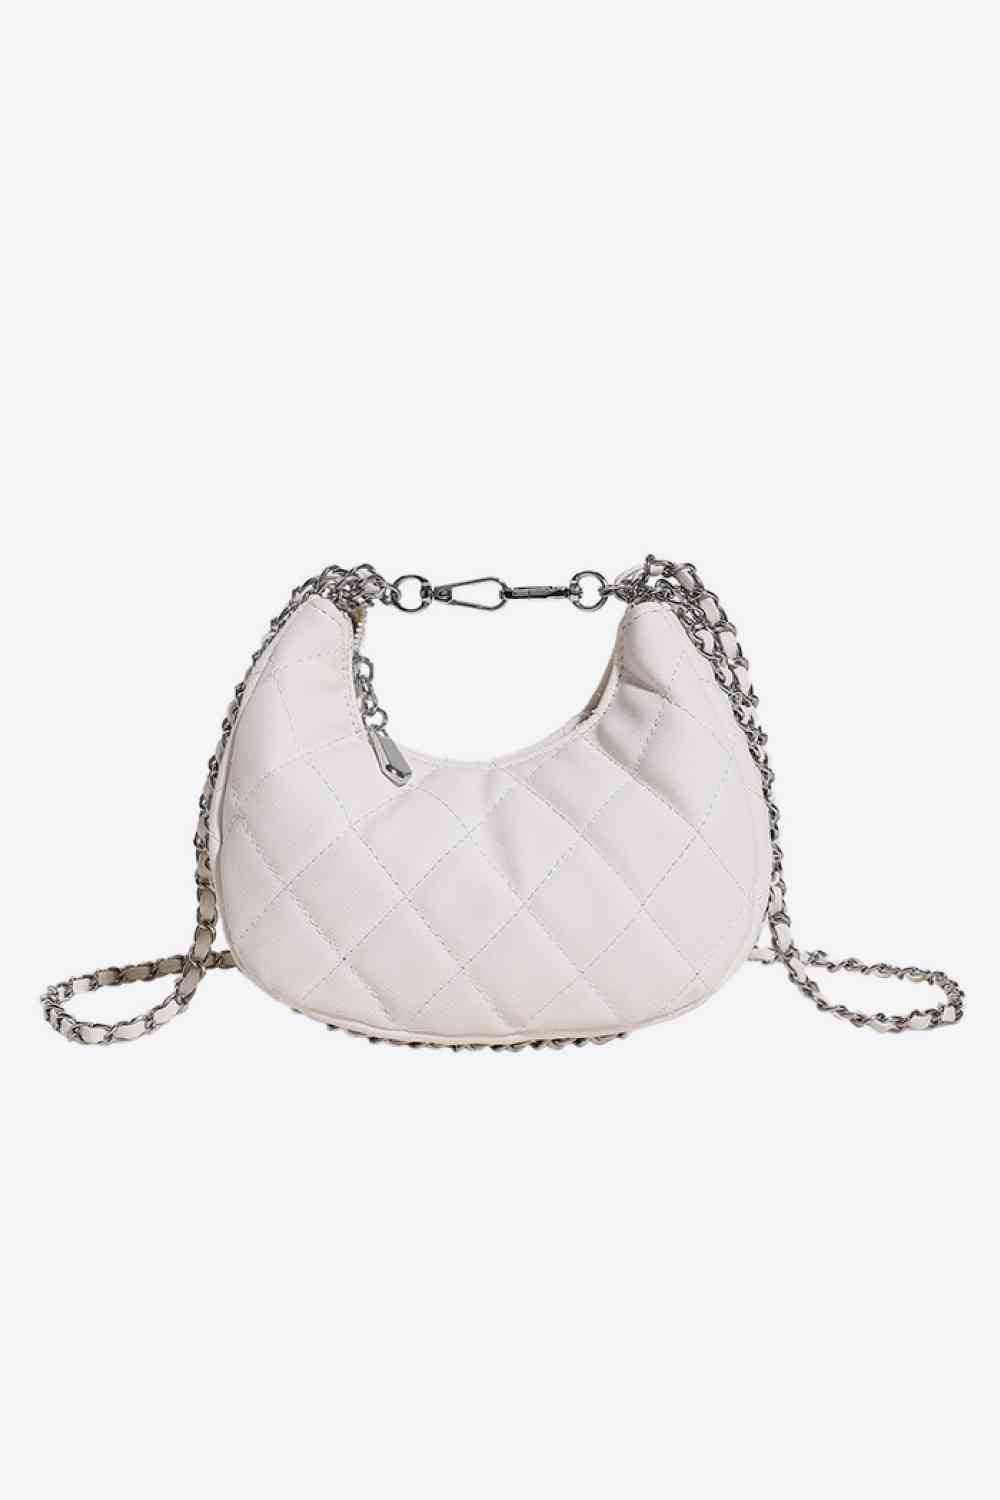 PU Leather Handbag - White / One Size - Women Bags & Wallets - Handbags - 20 - 2024